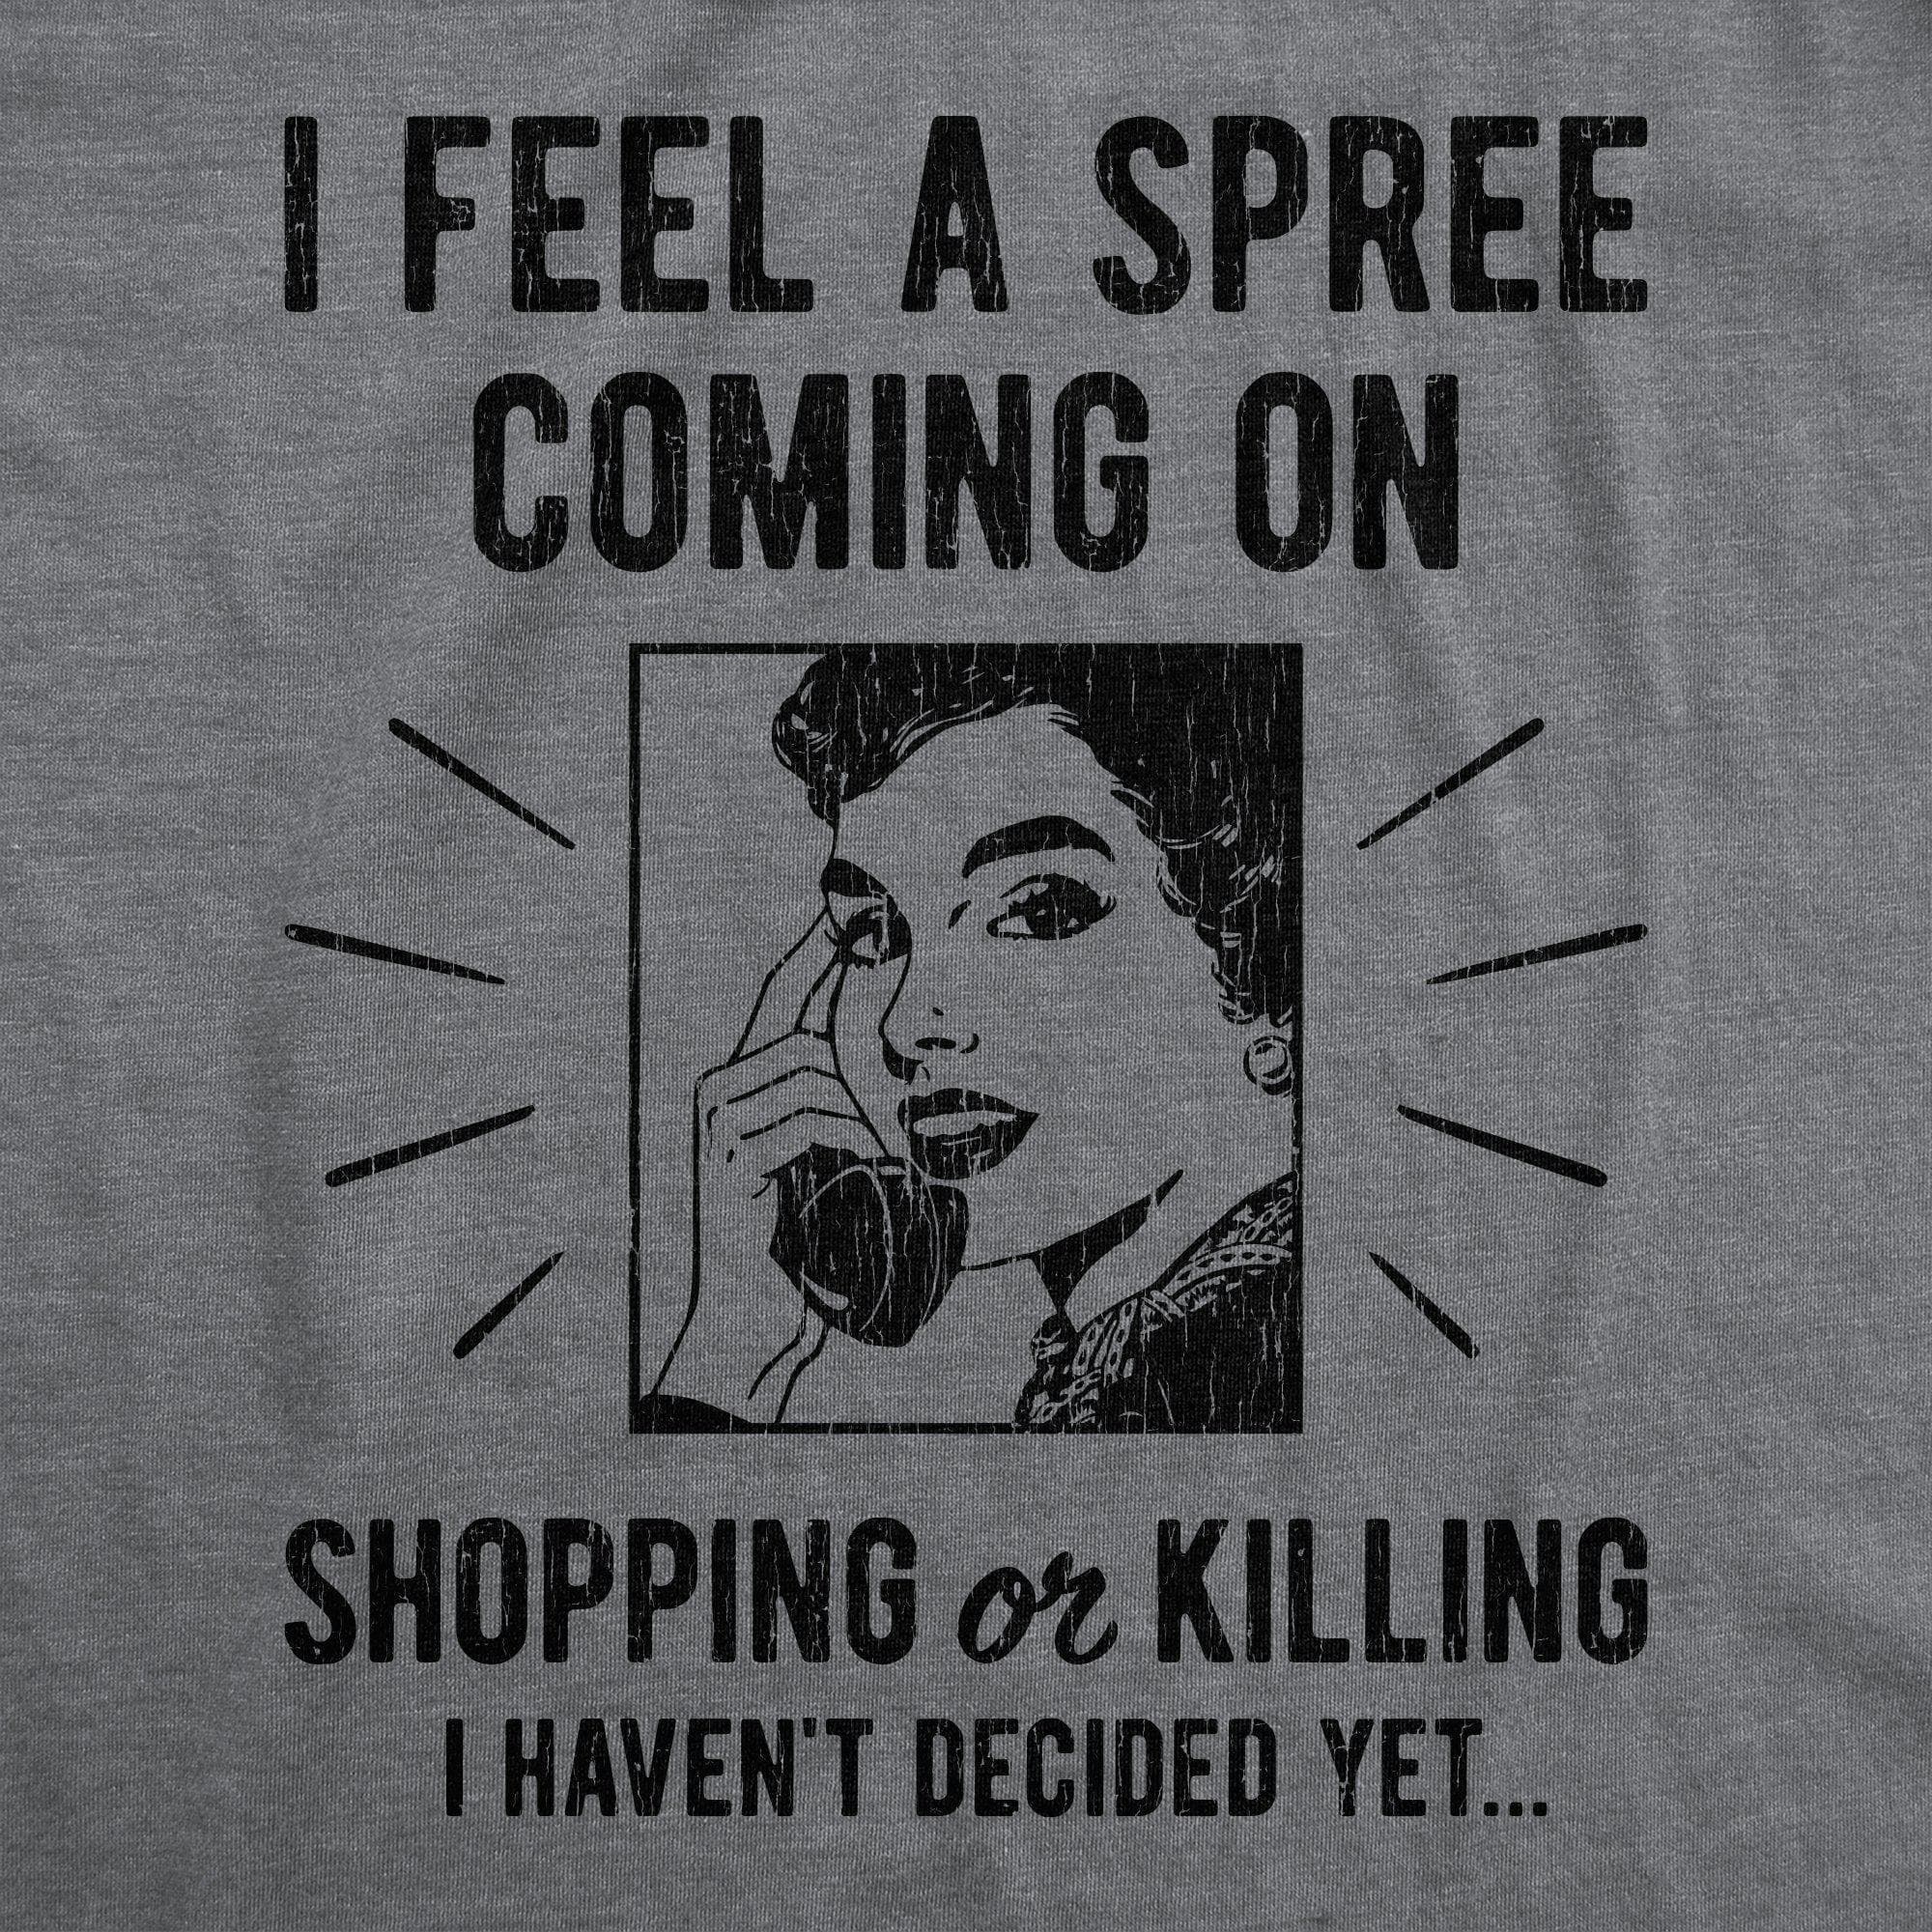 I Feel A Spree Coming On Women's Tshirt - Crazy Dog T-Shirts